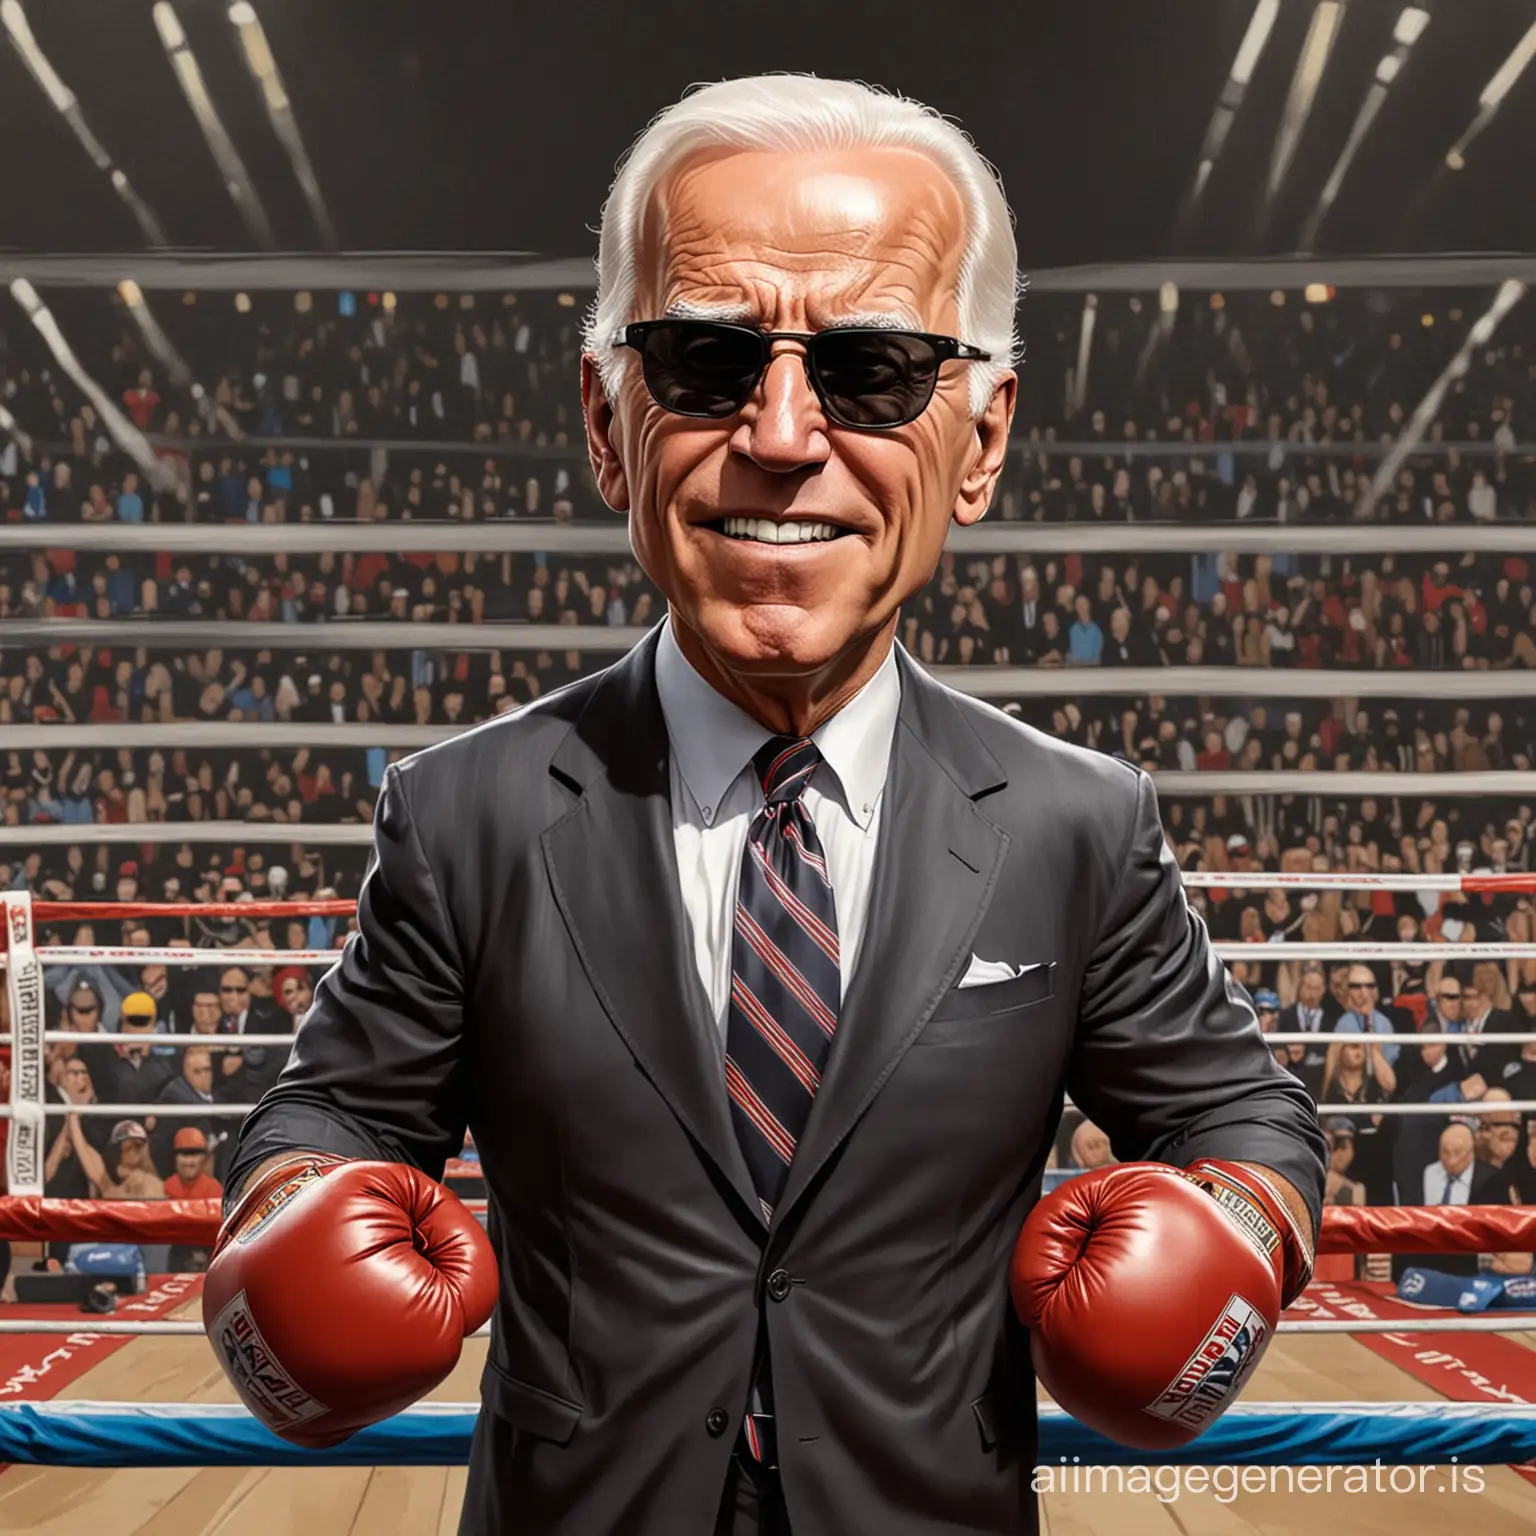 cartoon caricature of Joe Biden wearing dark sunglasses and standing in a boxing ring